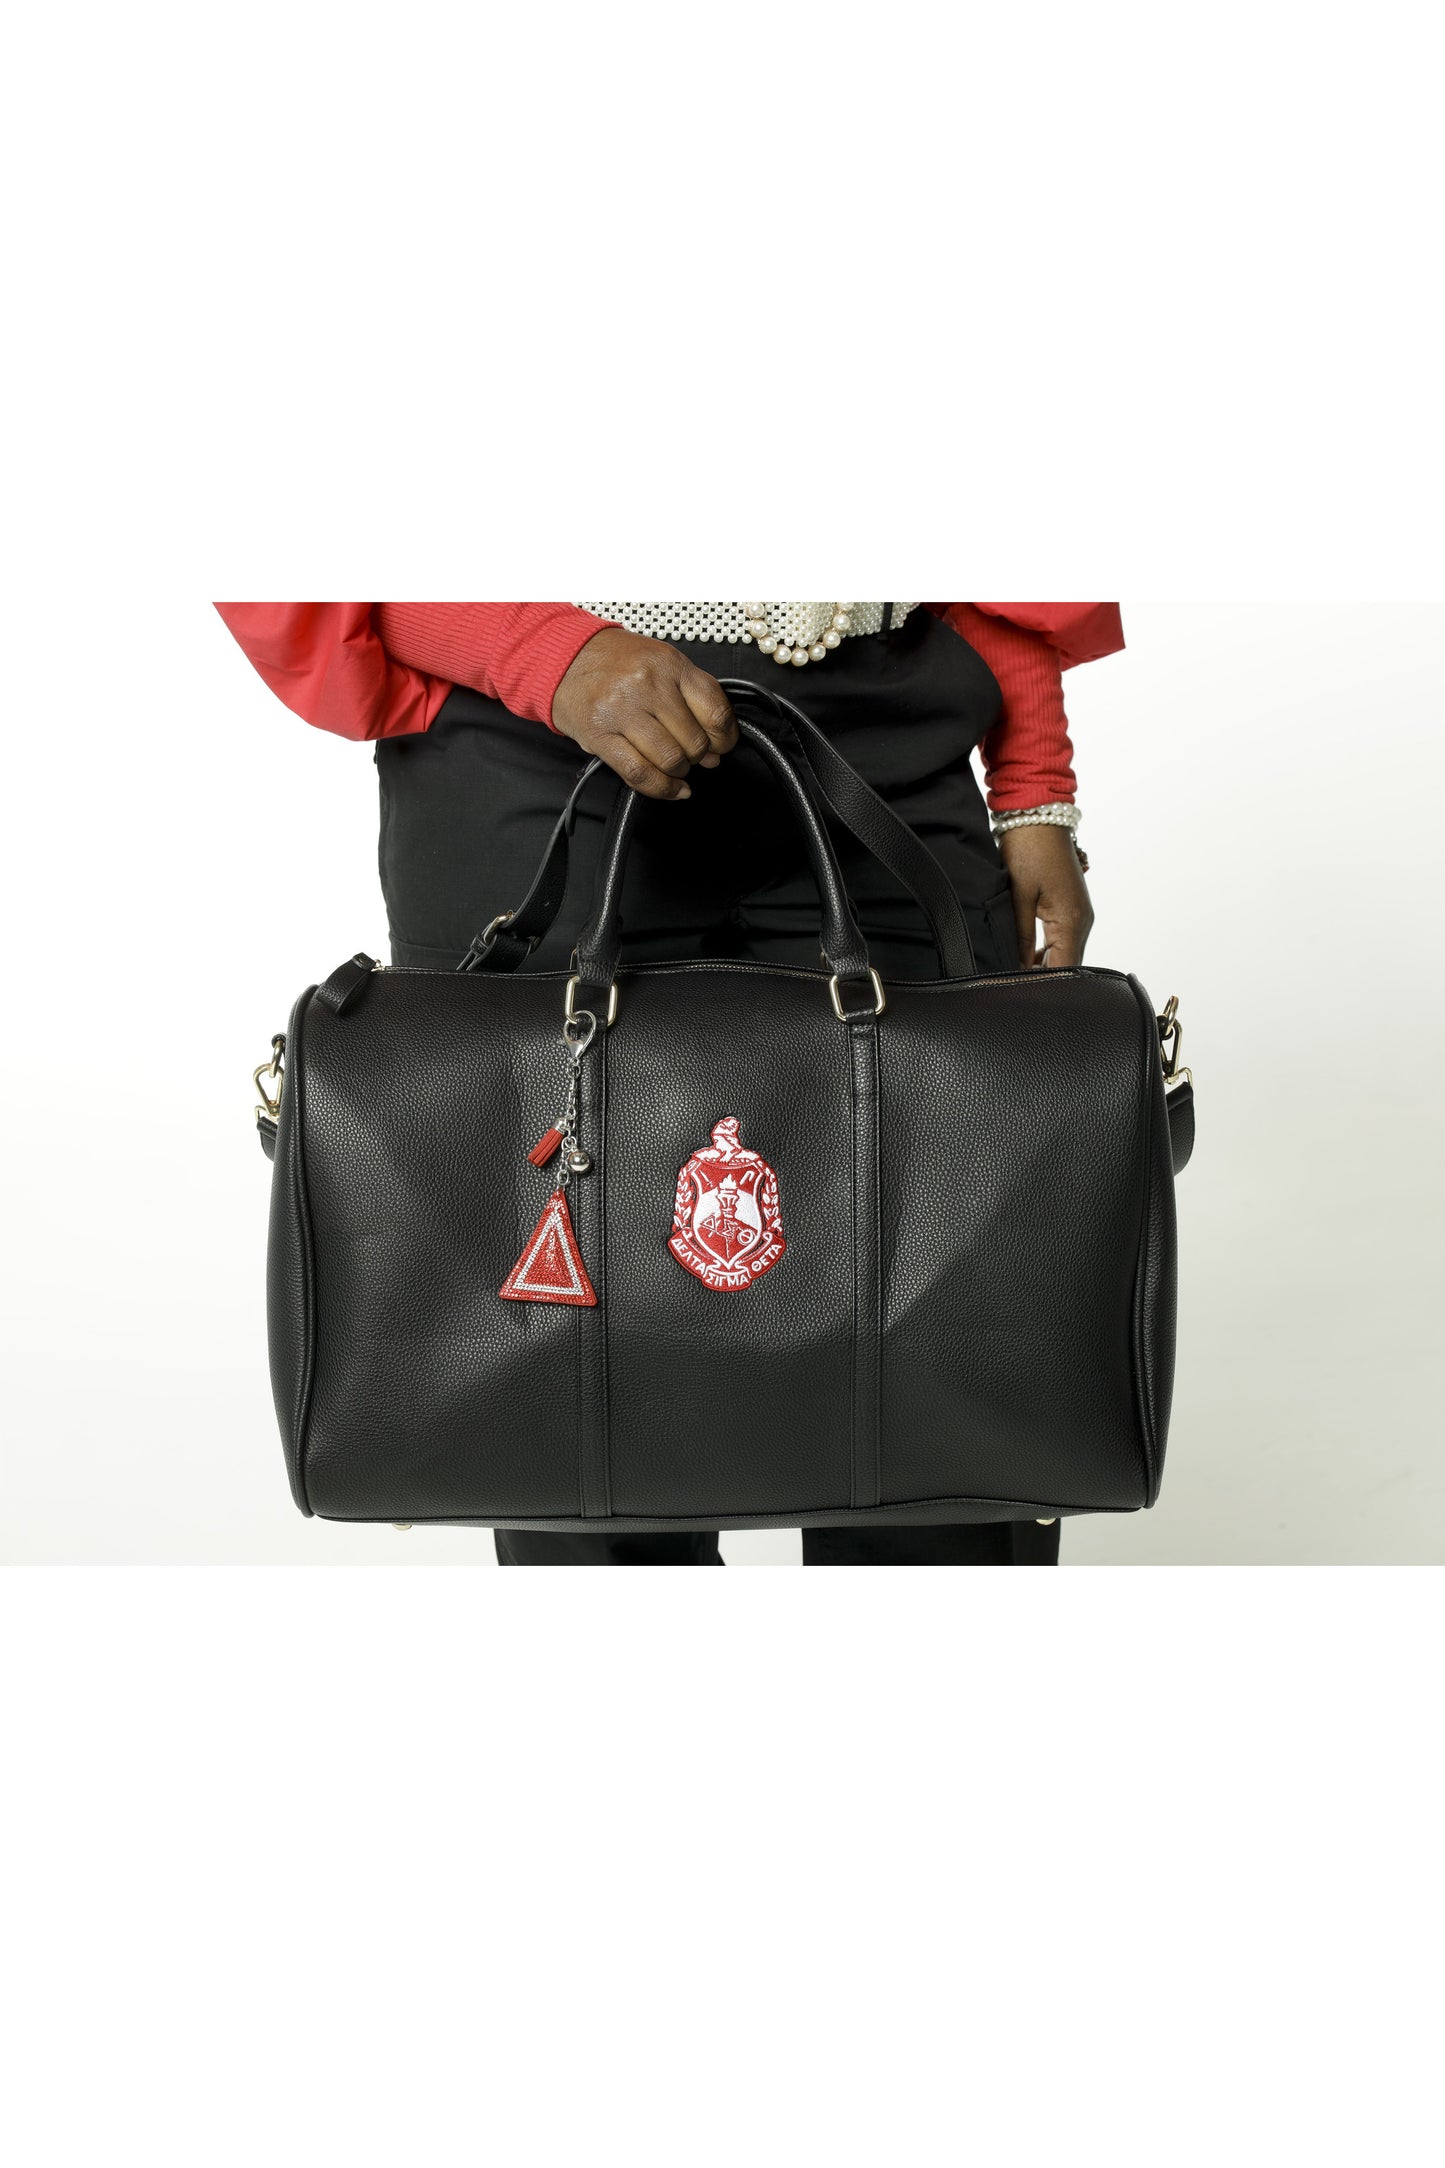 Delta Sigma Theta Embroidered Duffle Bag